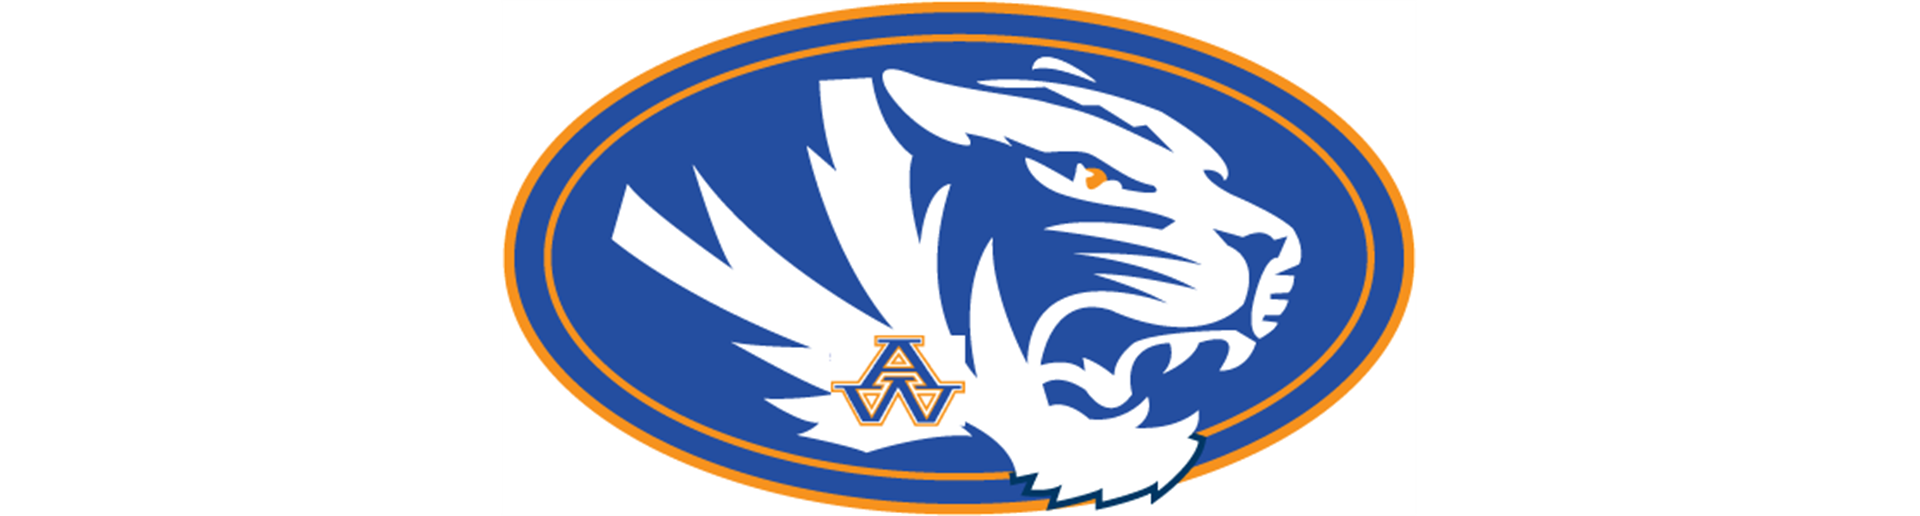 Appleton West Tigers